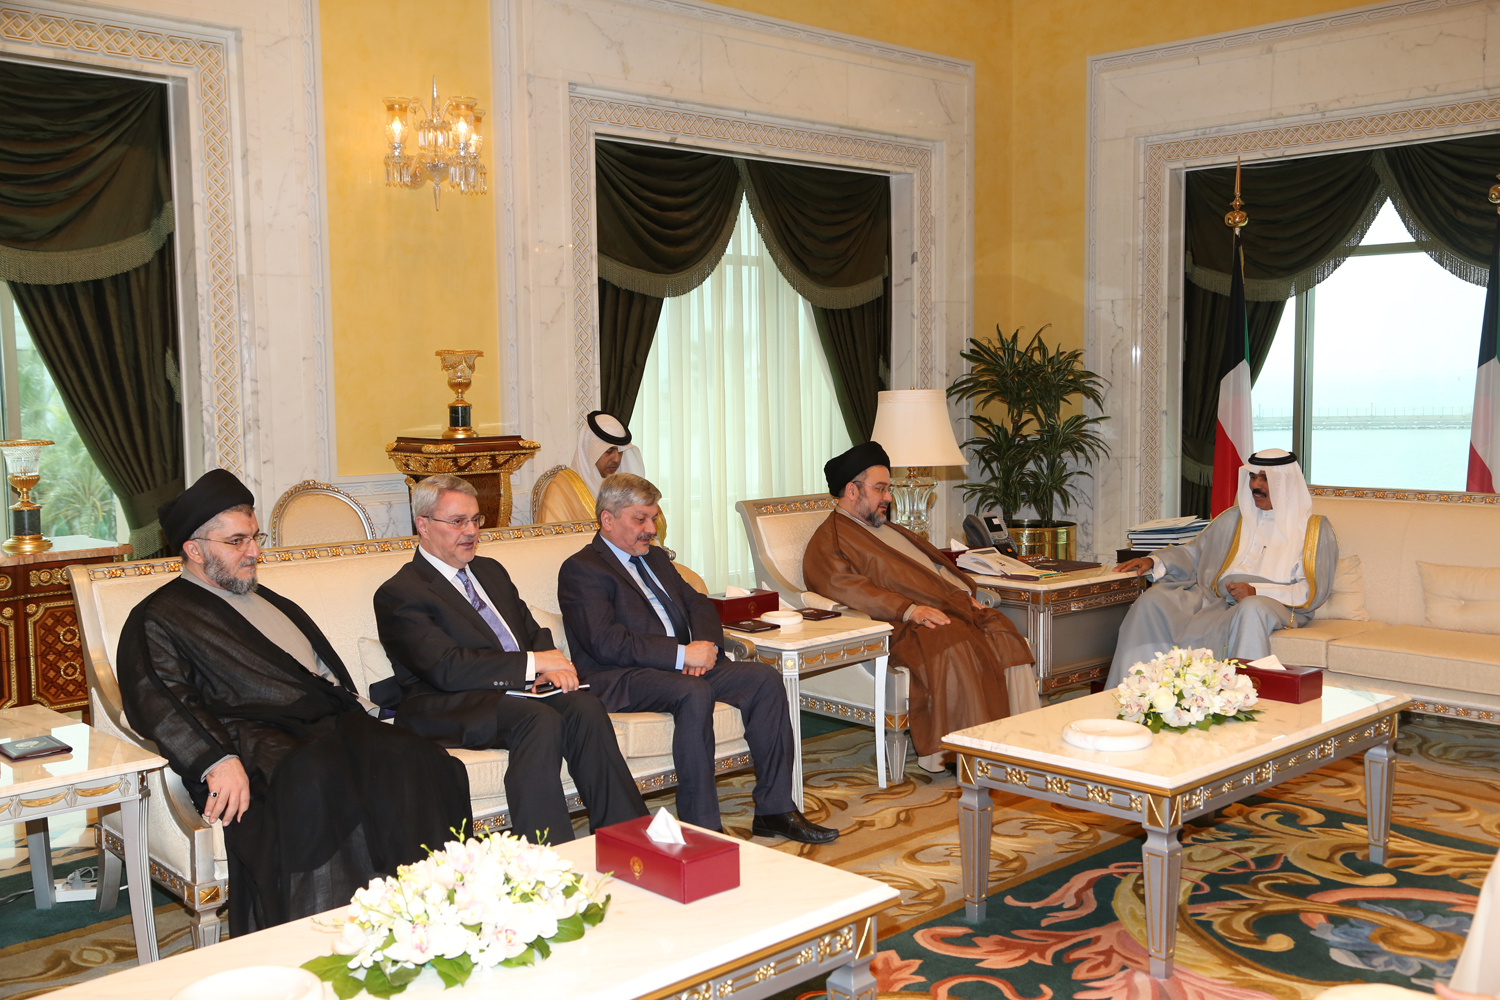 His Highness the Crown Prince Sheikh Nawaf Al-Ahmad Al-Jaber Al-Sabah received visiting Iraqi member of parliament Dr. Ibrahim Mohammad Bahr Al-Uloum and his accompanying delegation